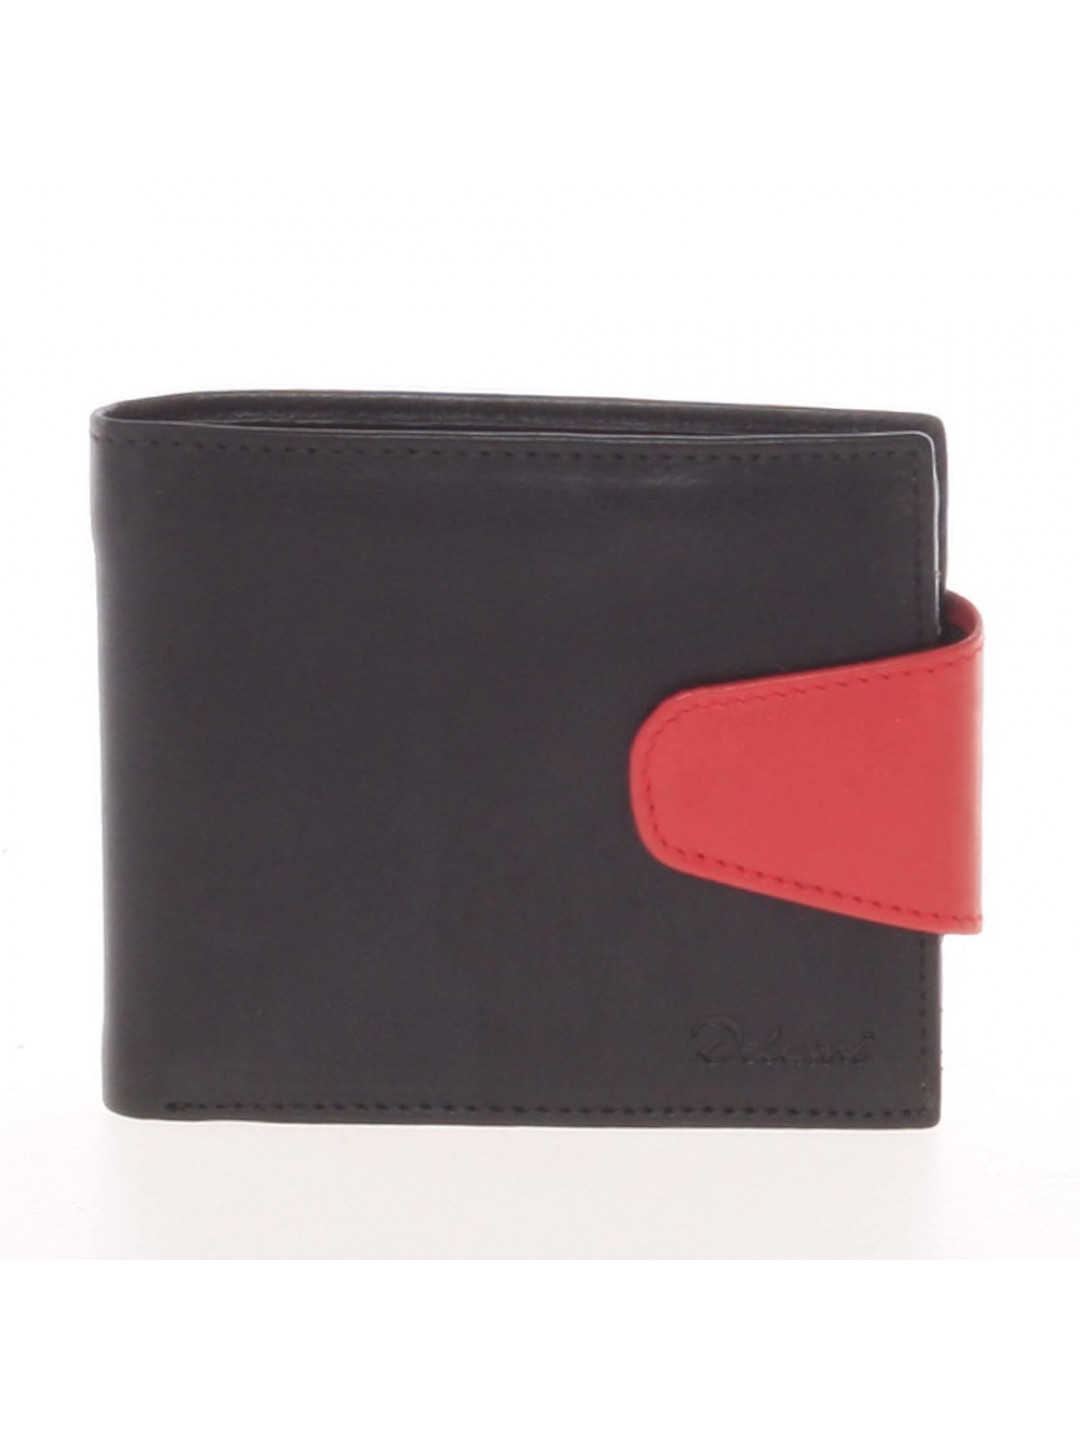 Pánská kožená peněženka Delami Ryan černo červená